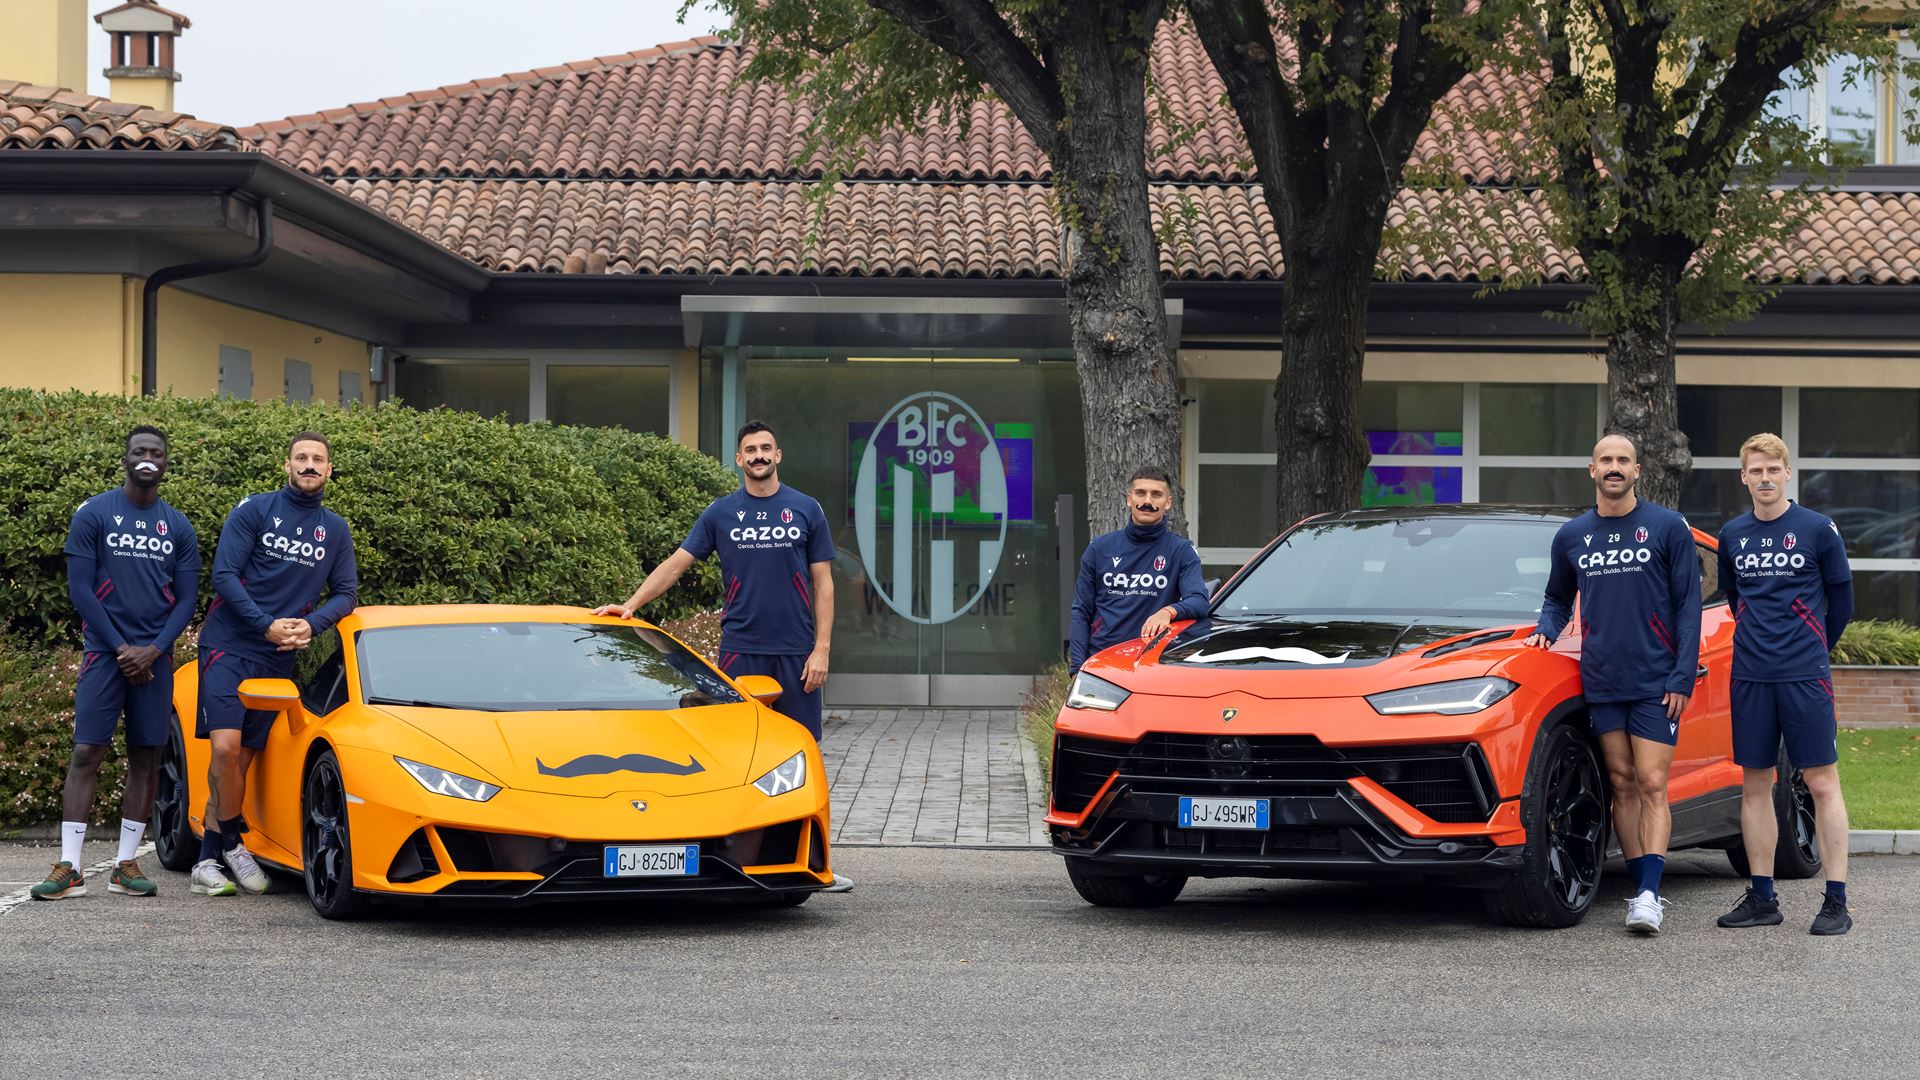 Automobili Lamborghini and Bologna Football Club together for Movember